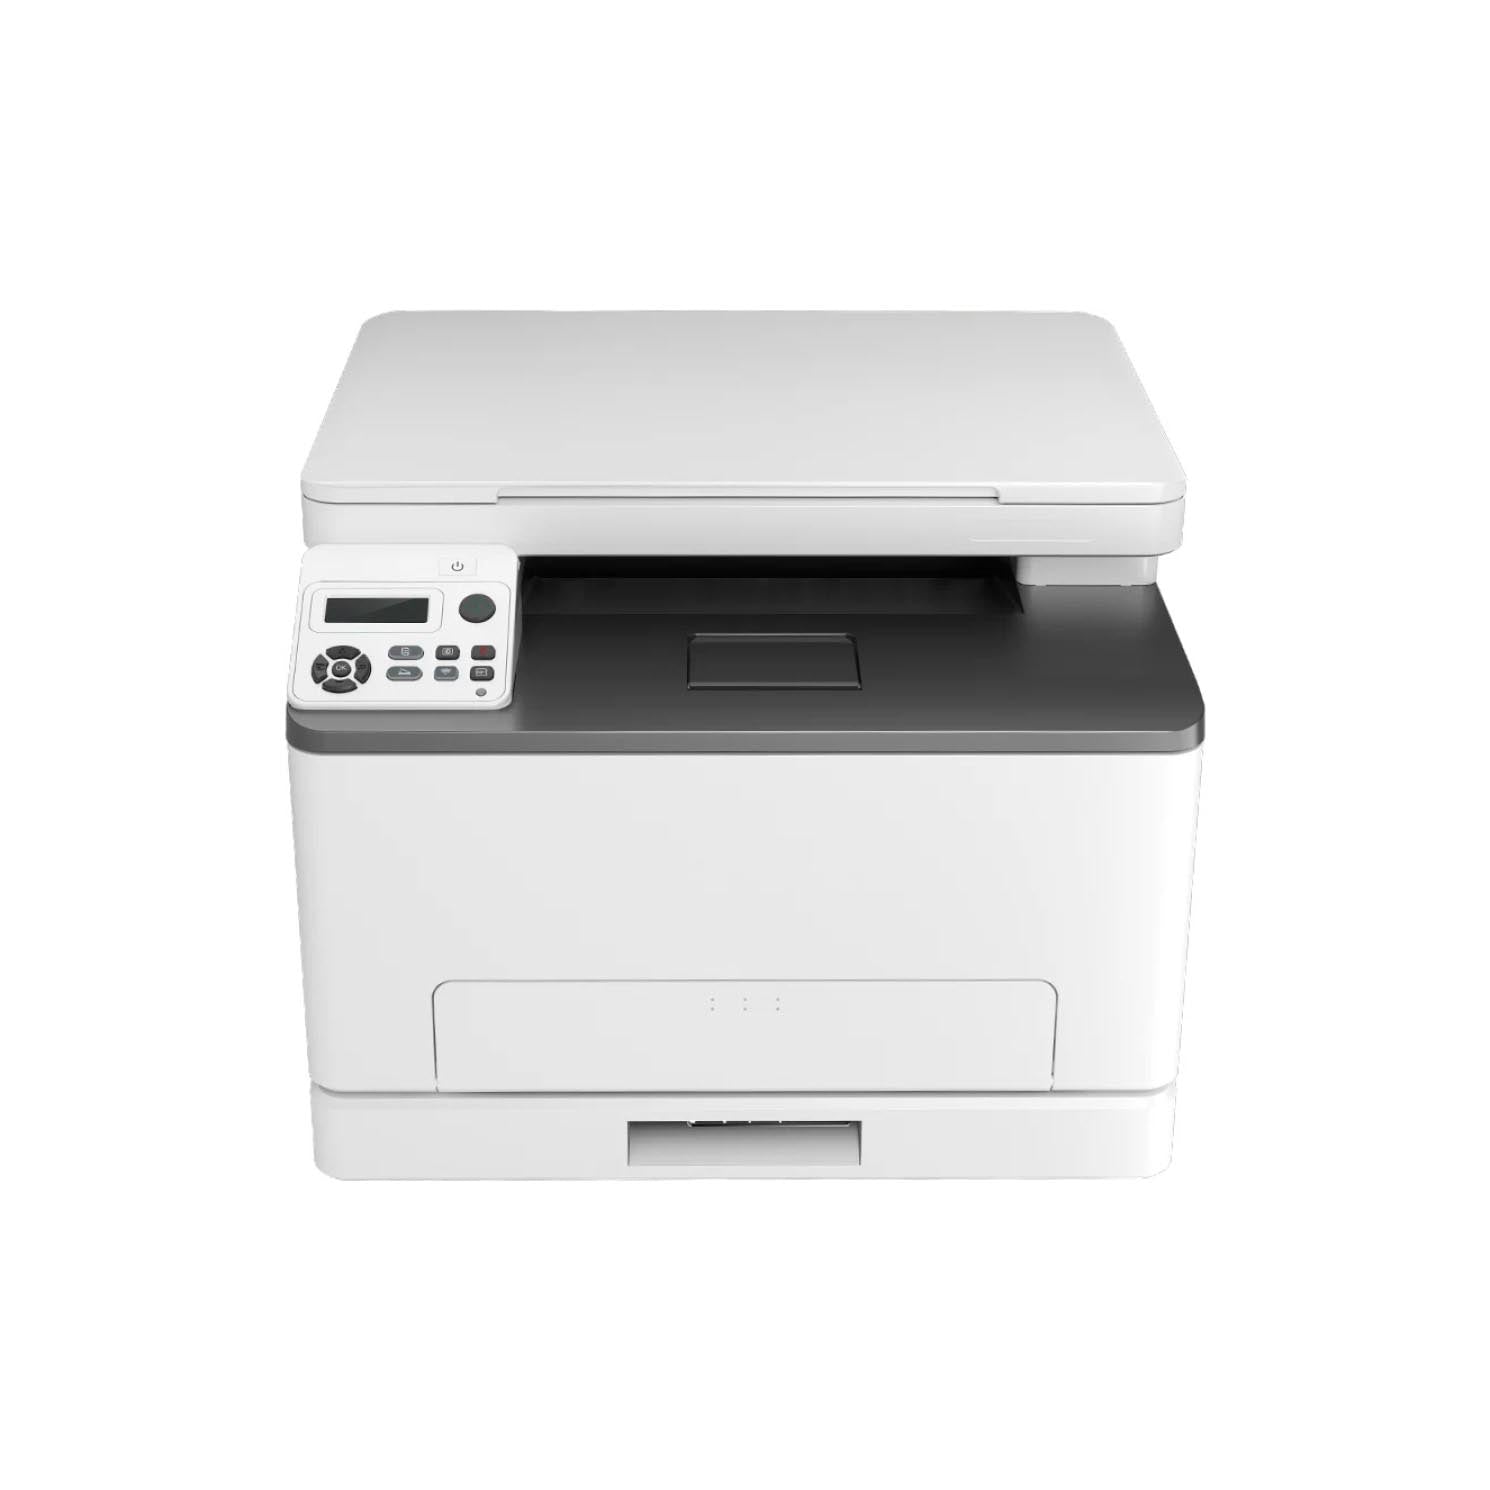 PrintMate Office Printer